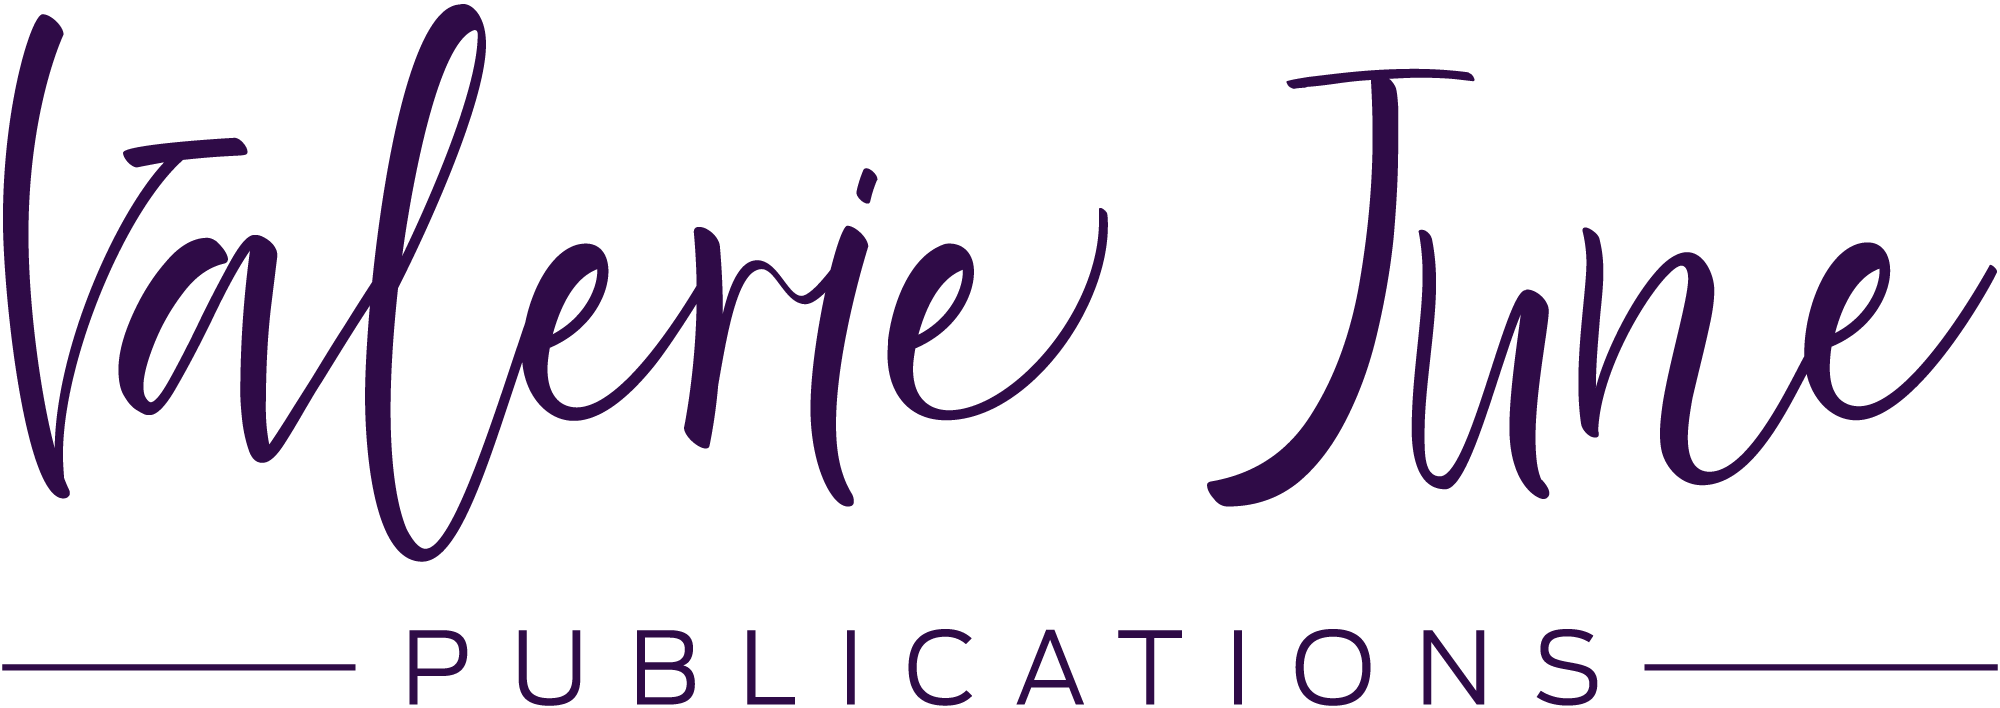 valerie june publications logo